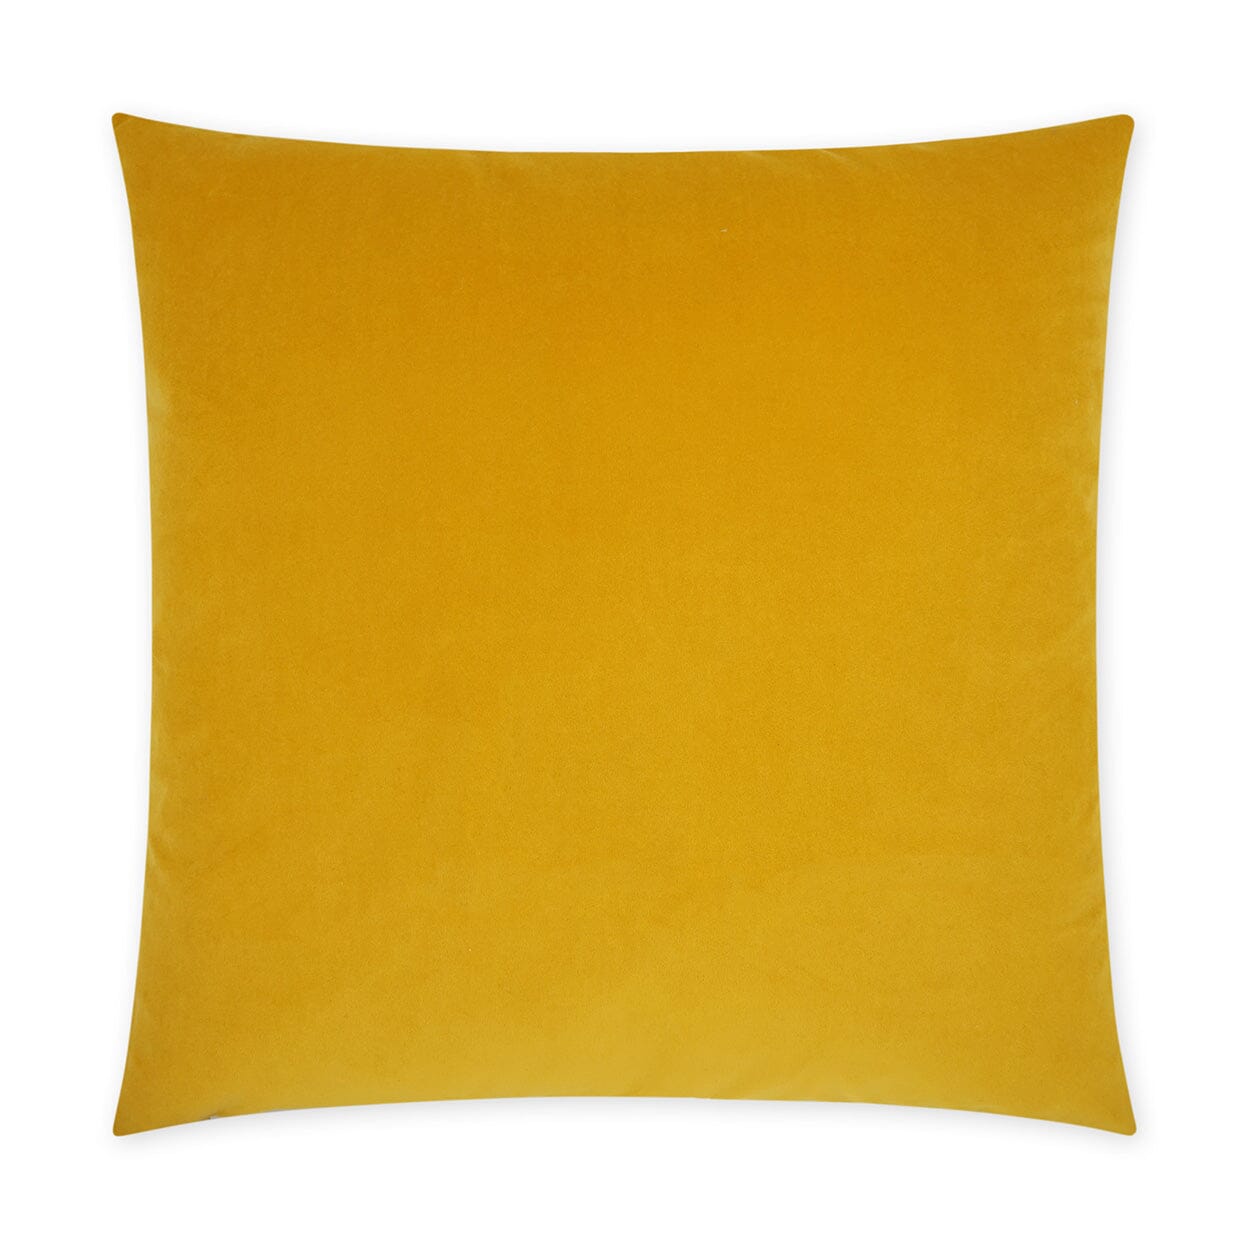 D.V. Kap 24" x 24" Decorative Throw Pillow | Posh Duo Mustard Pillows D.V Kap Home